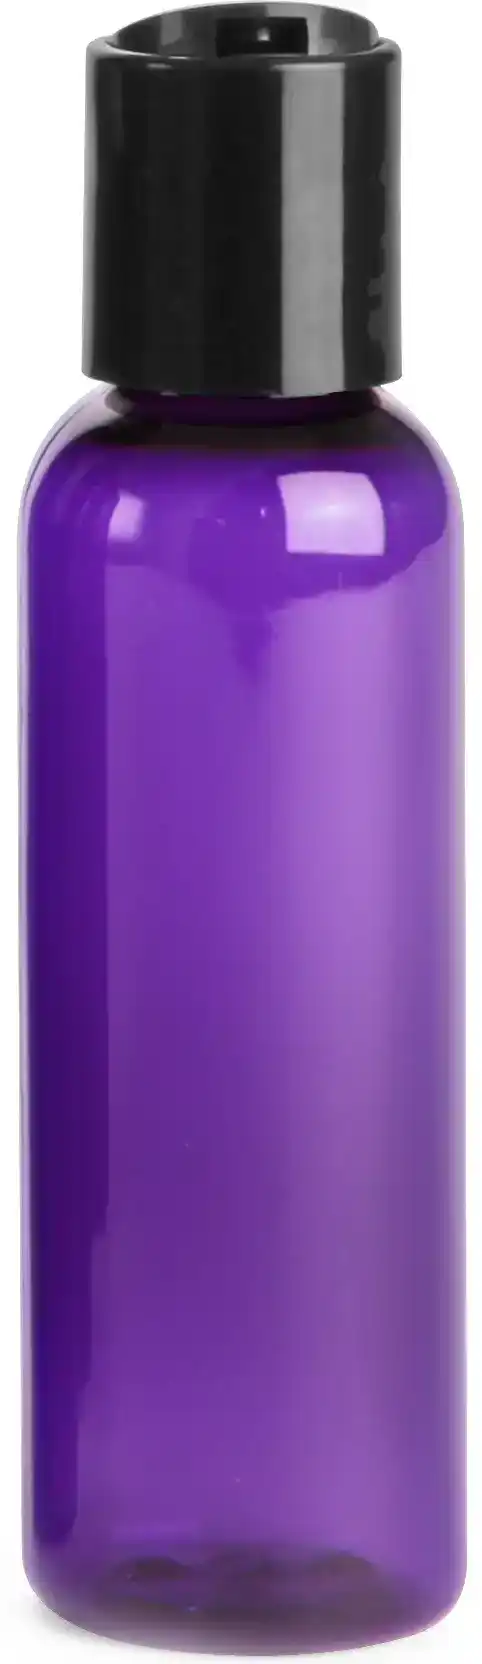 2 oz Purple PET Cosmo Round Bottles w/ Black Disc Top Caps